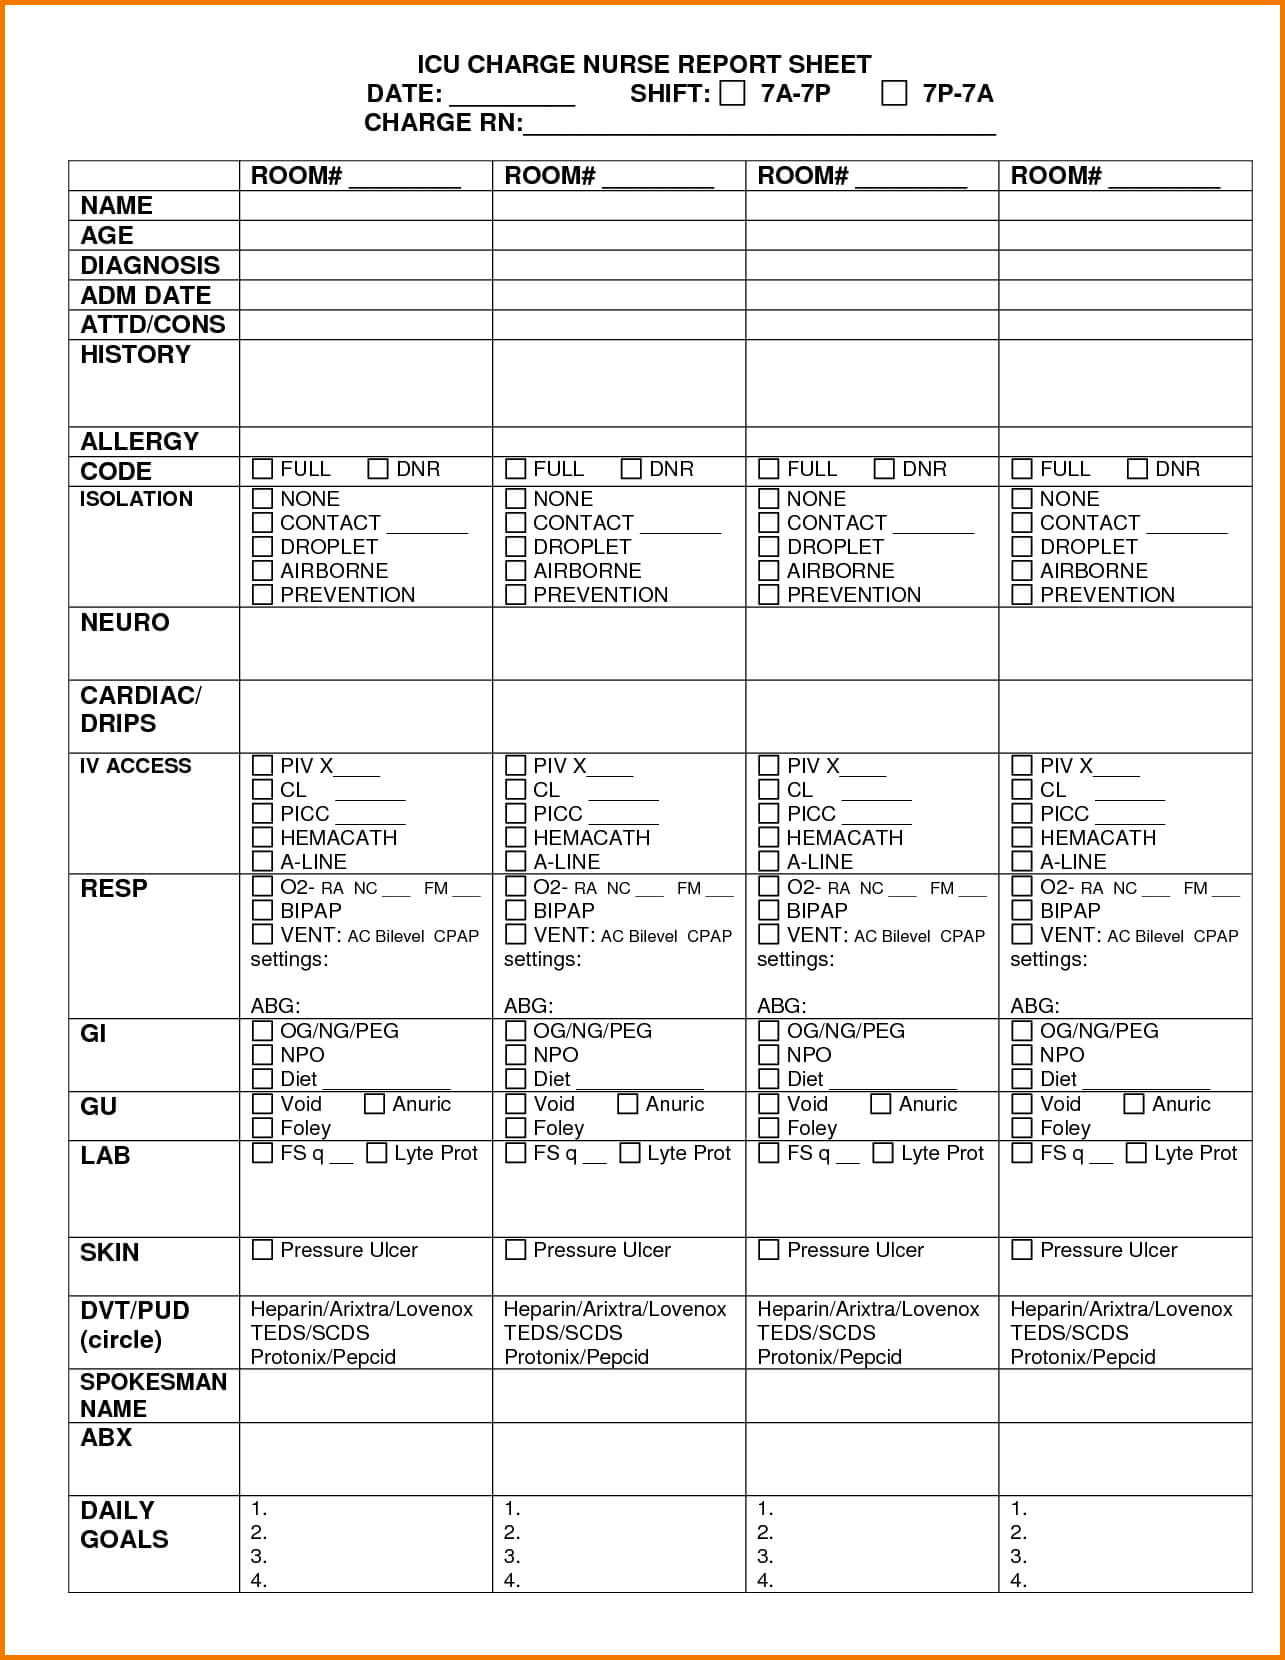 cna assignment sheet templates - Ficim Regarding Nurse Report Sheet Templates